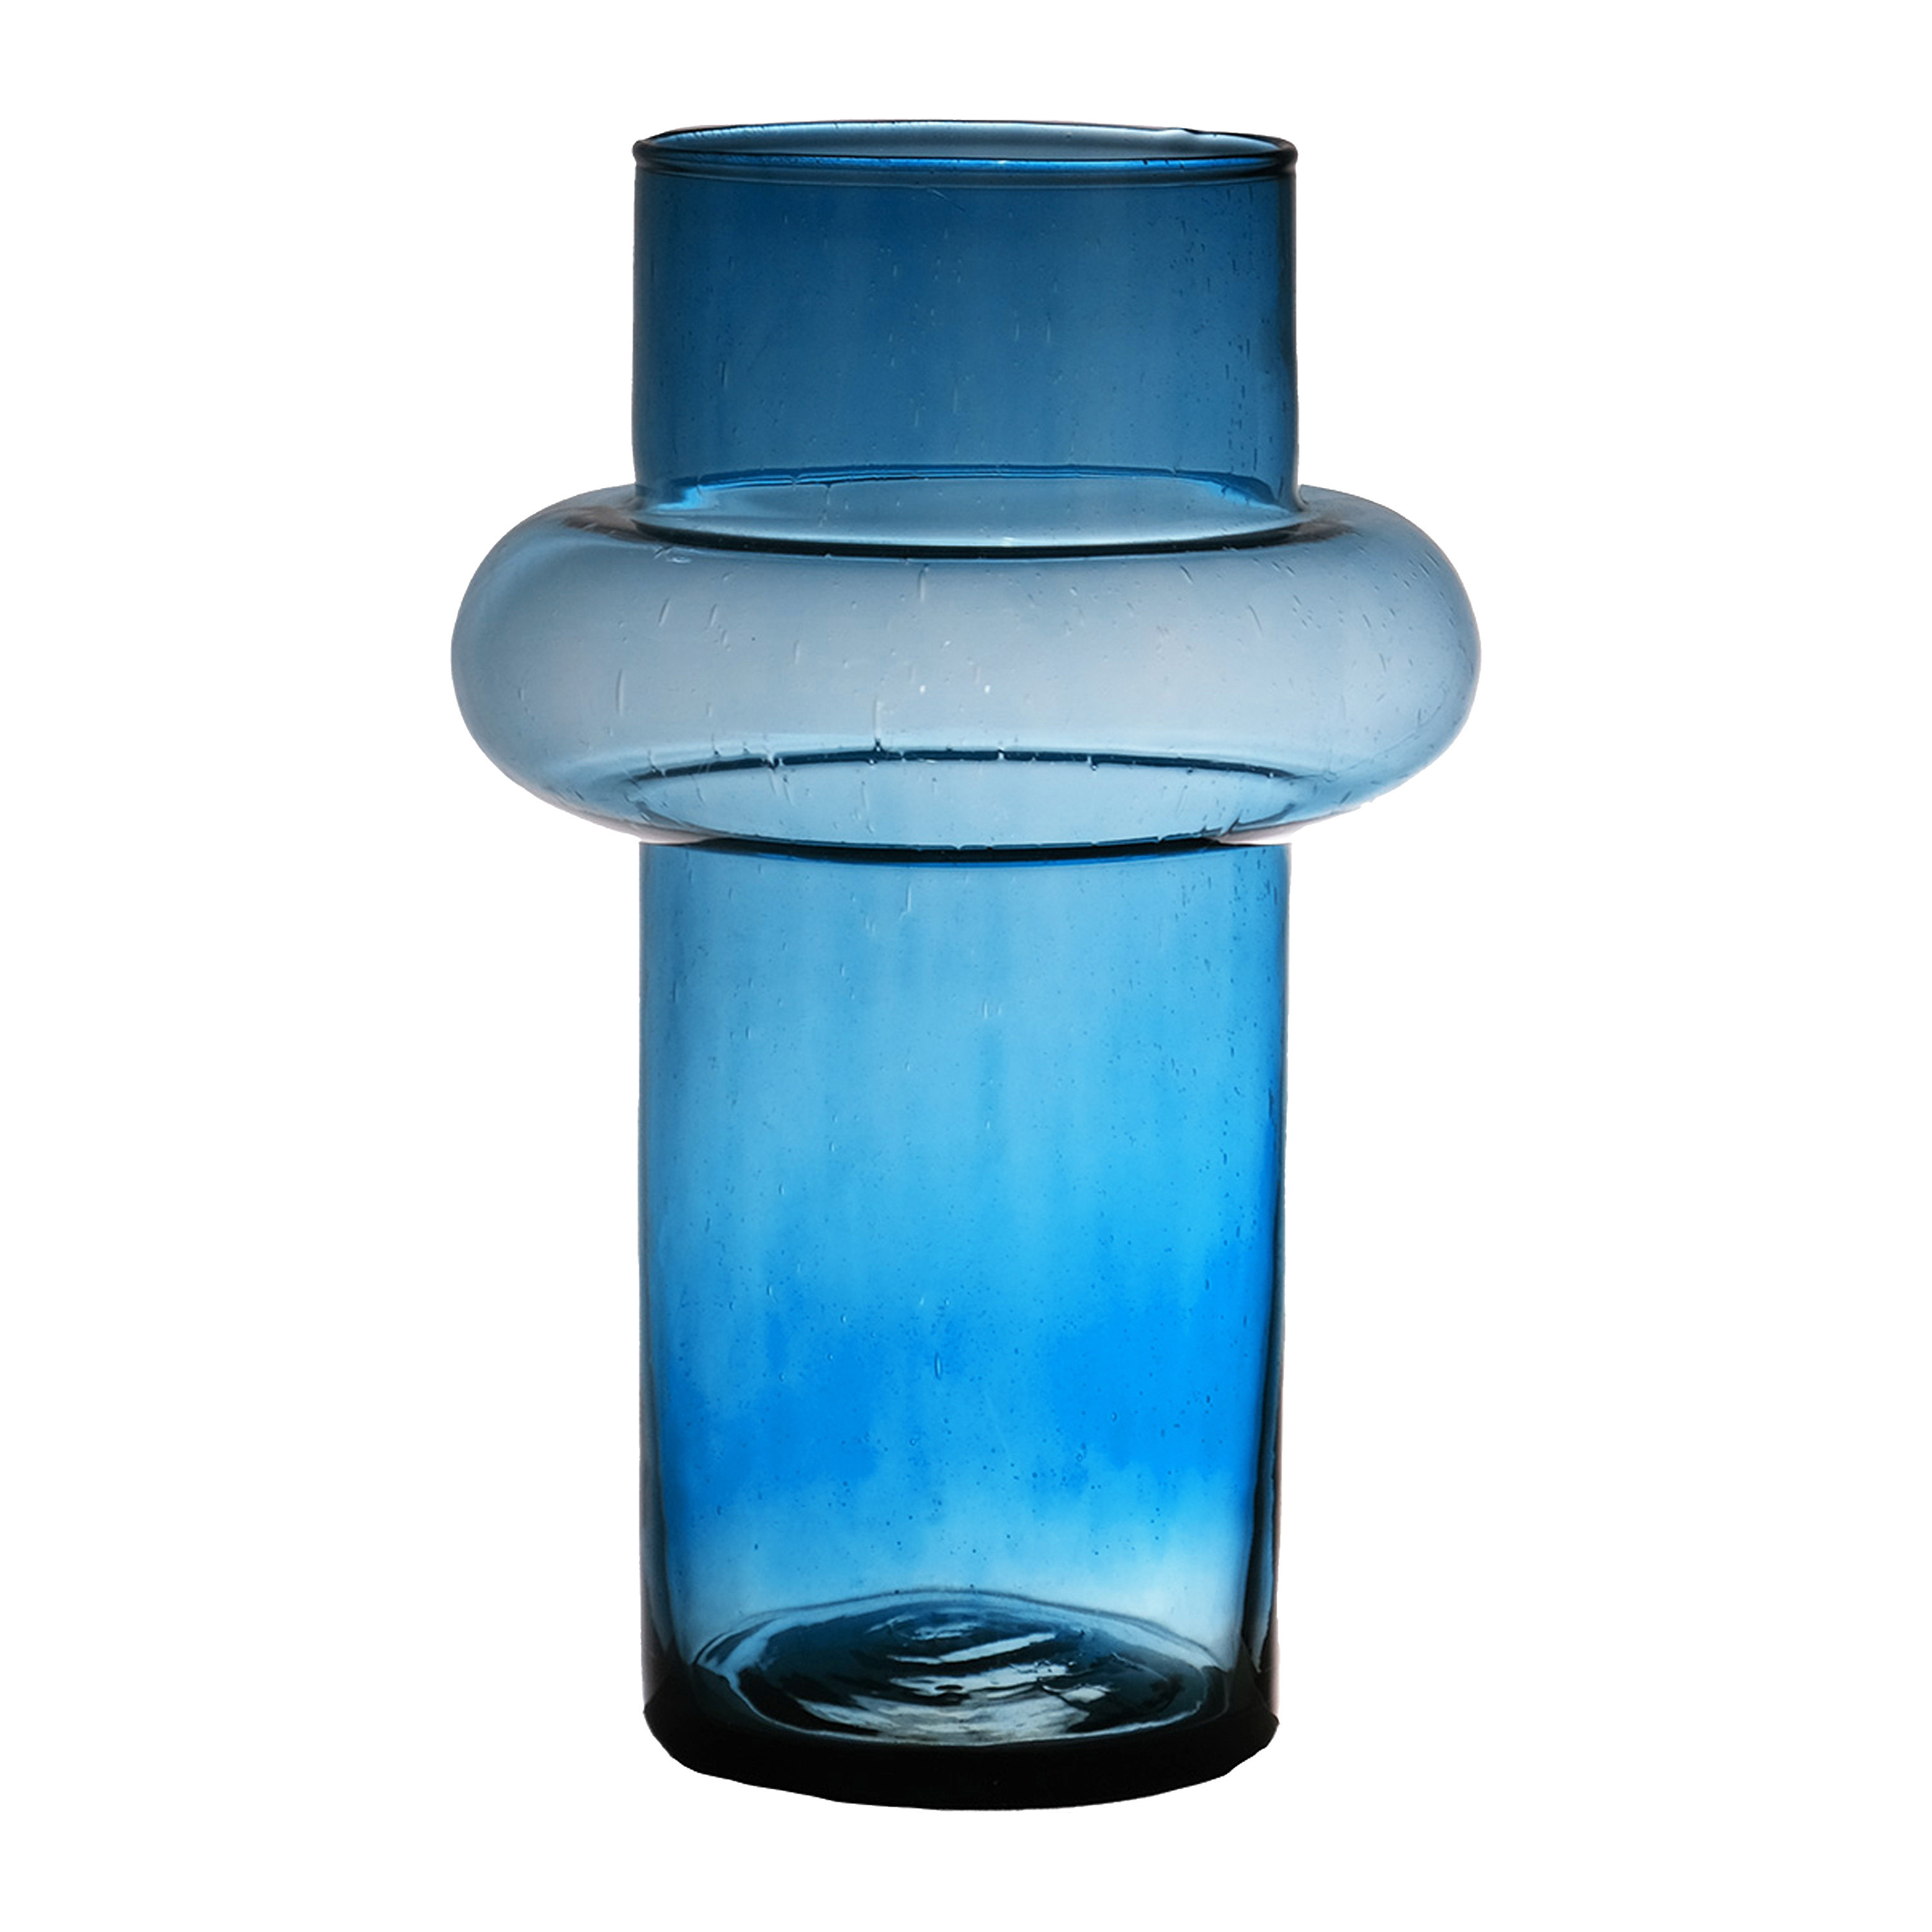 Hakbijl Glass Bloemenvaas Luna - transparant blauw - eco glas - D19 x H30 cm - cilinder vaas -